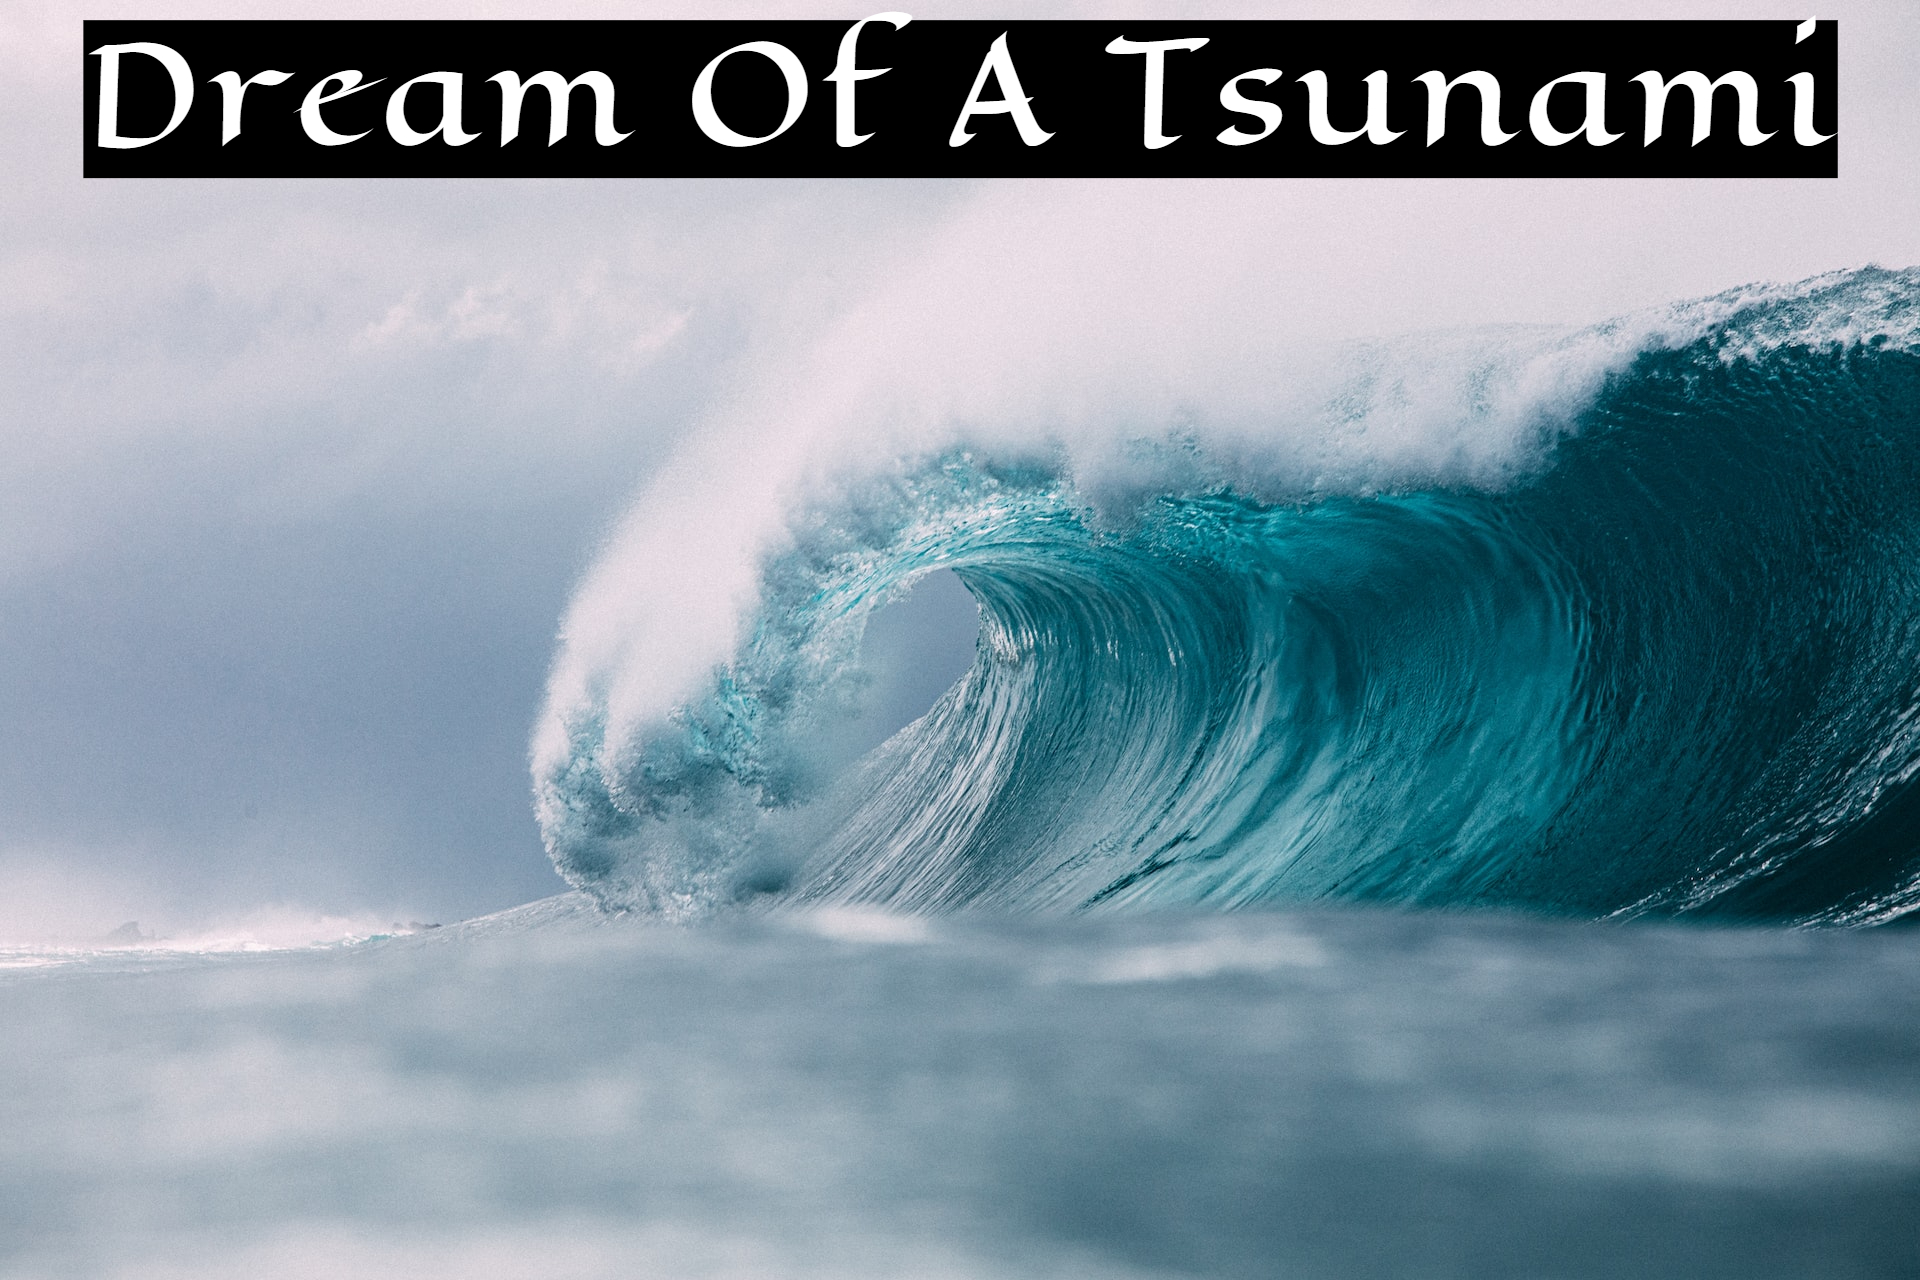 Dream Of A Tsunami - True Meaning And Right Interpretation